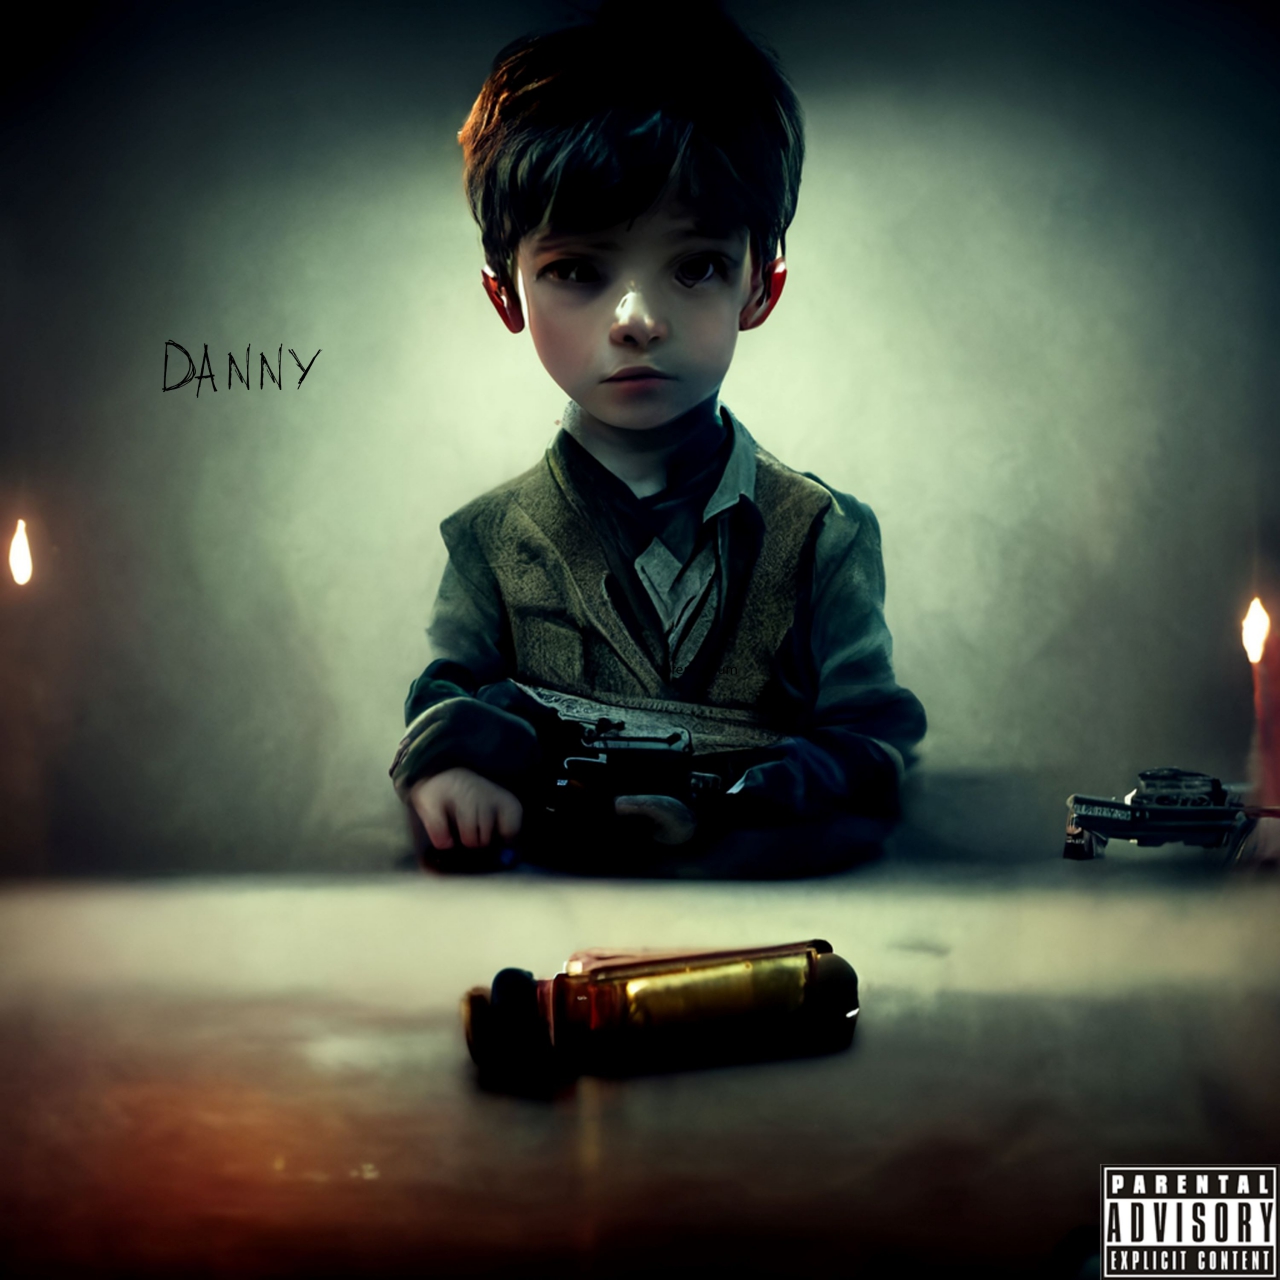 DannyWhite - “Danny”